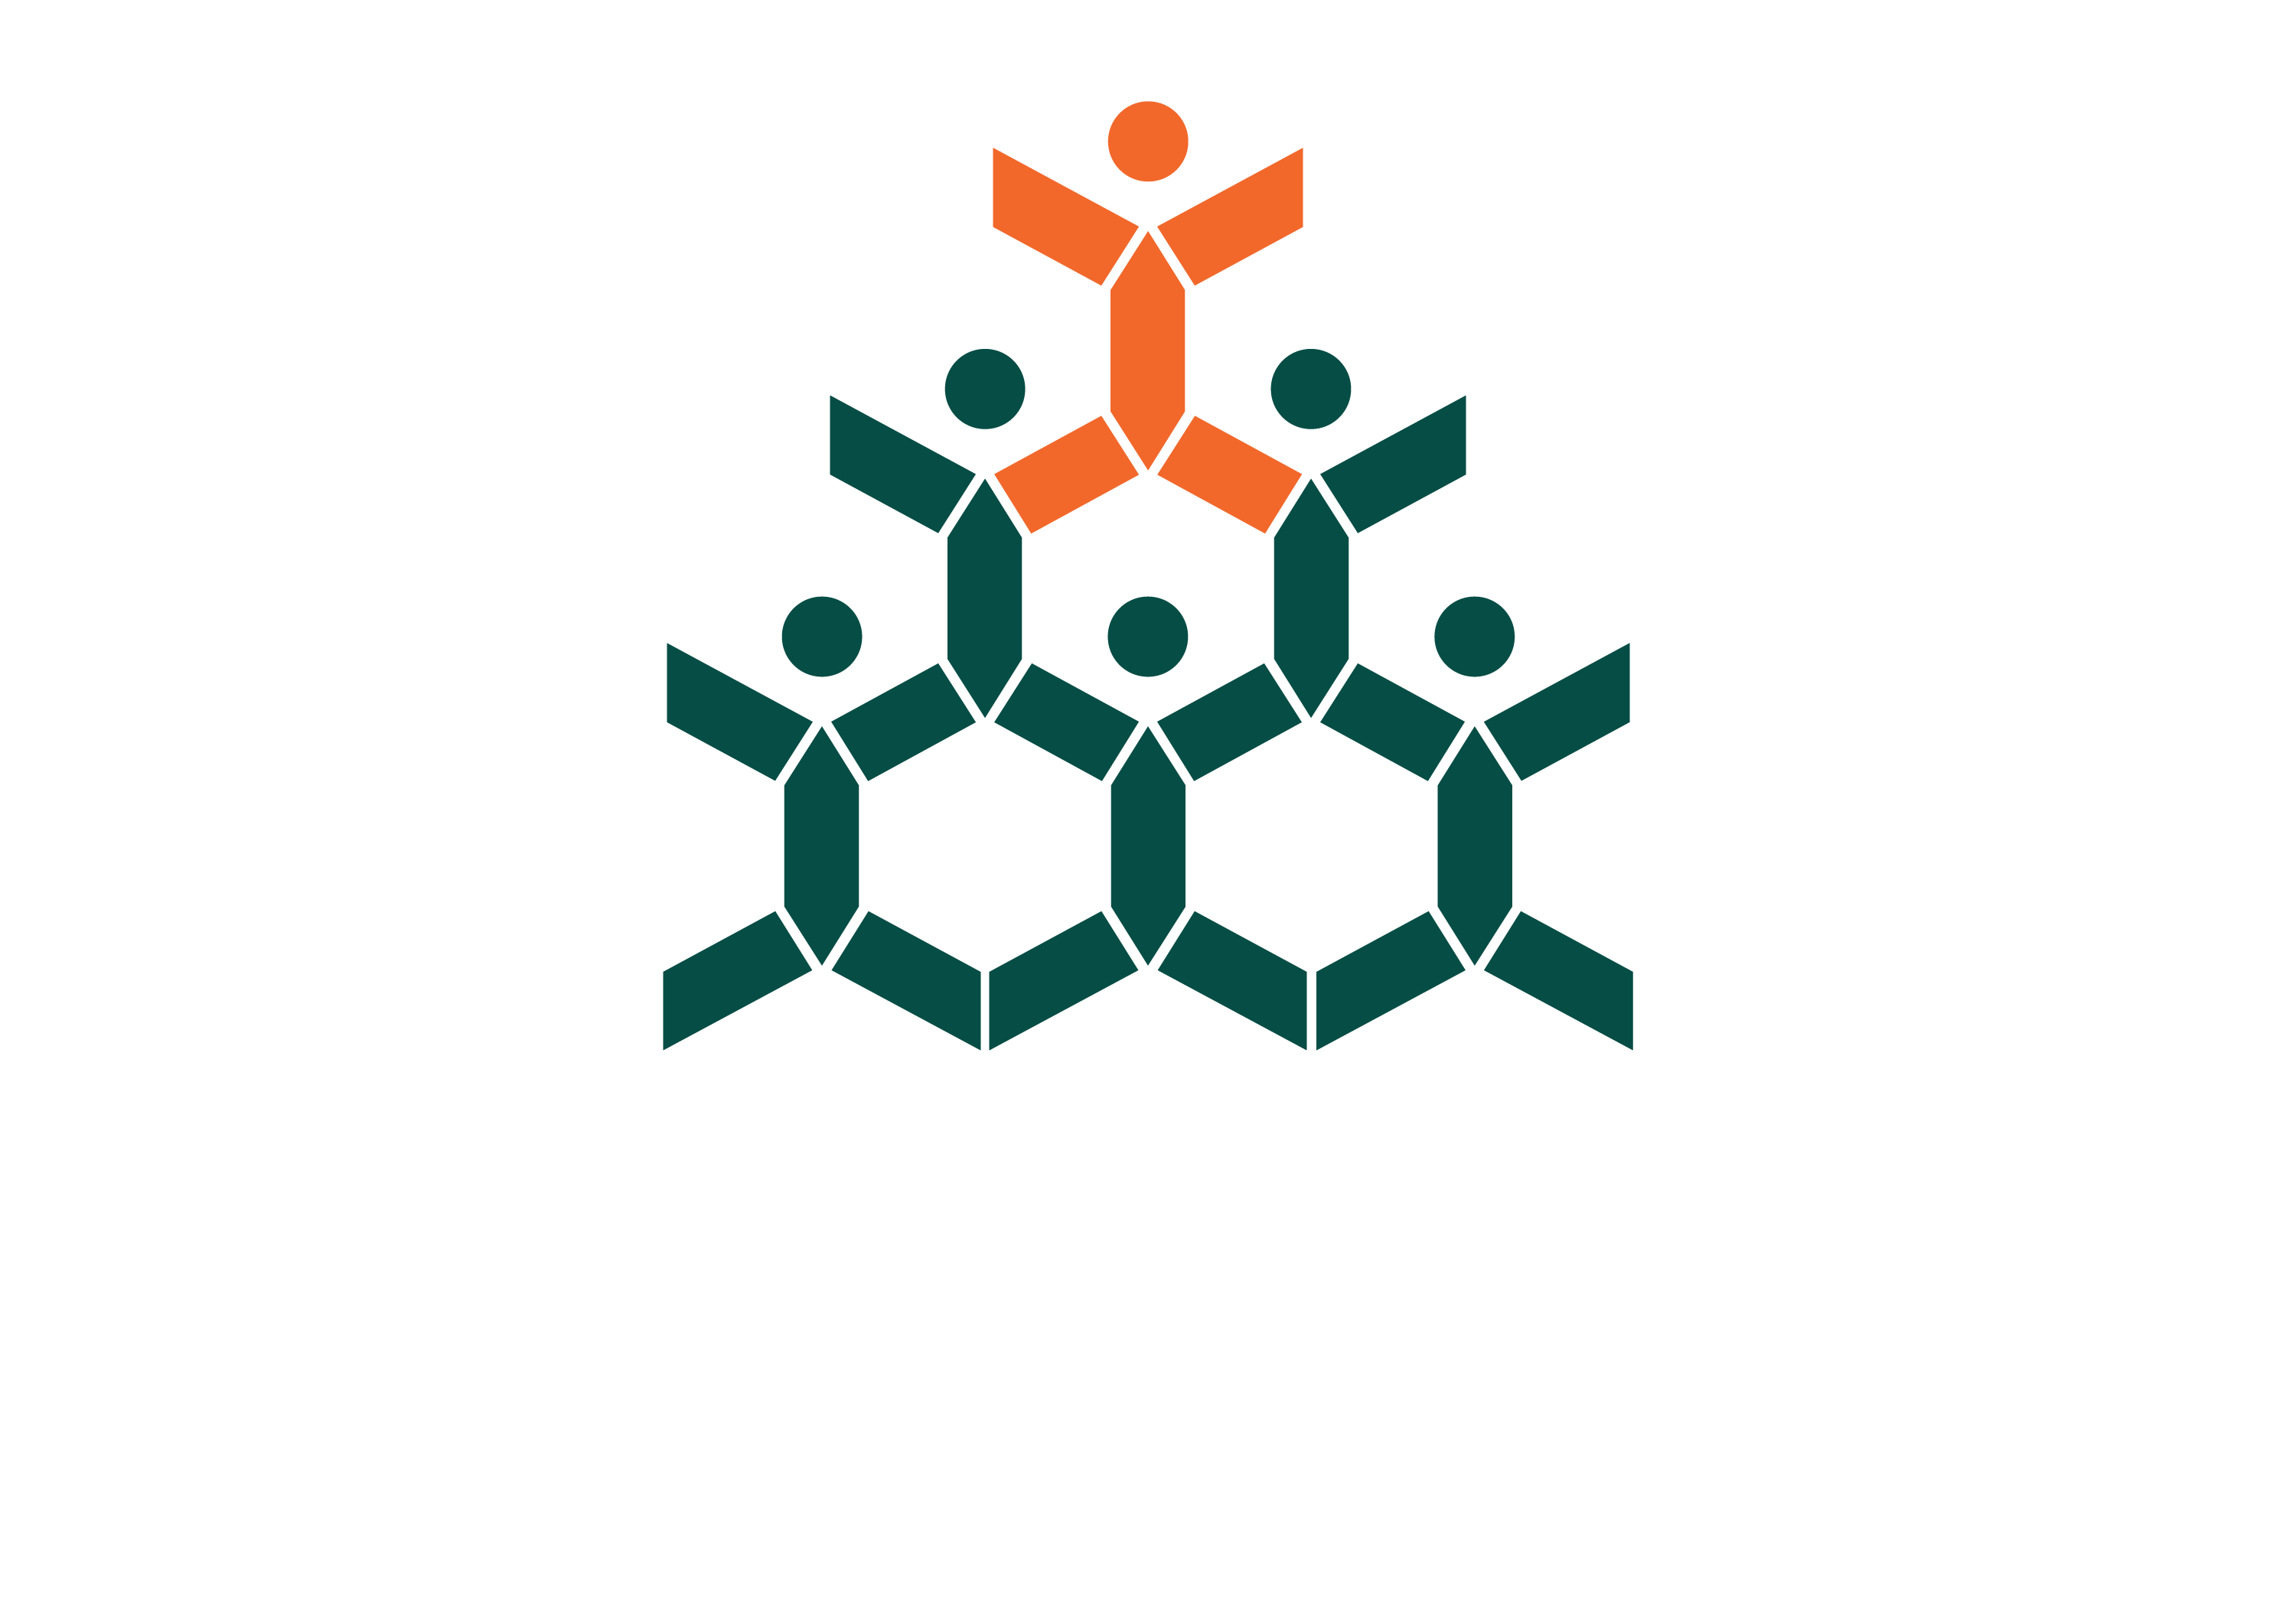 Social Development Centre Waterloo Region logo